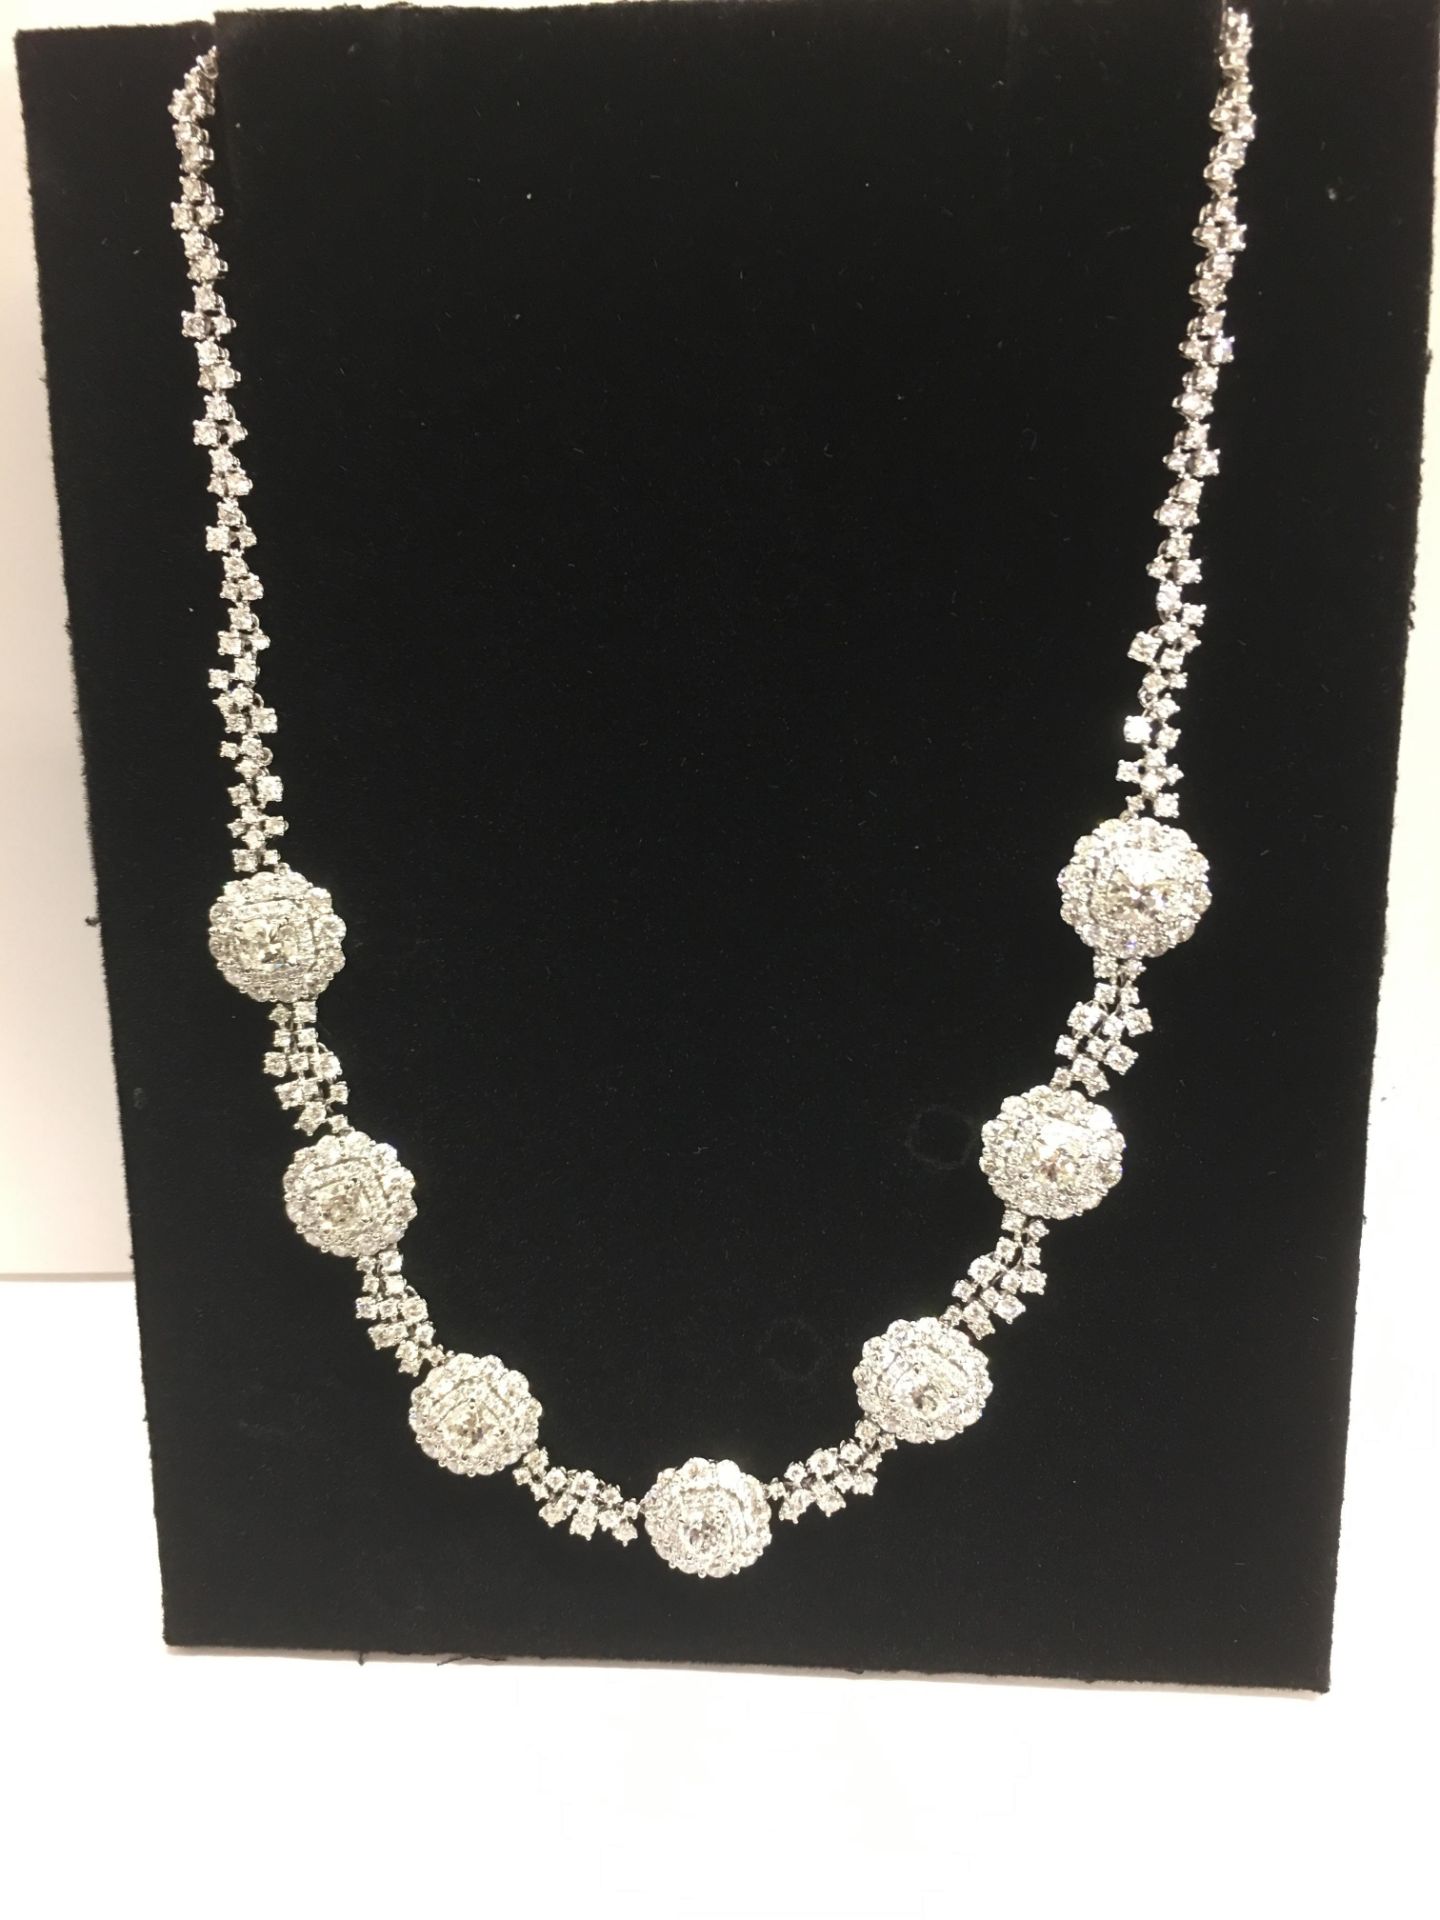 International diamond necklace ,7 cushion shape diamonds 1ct each total 7.33ct h colour si clarity,